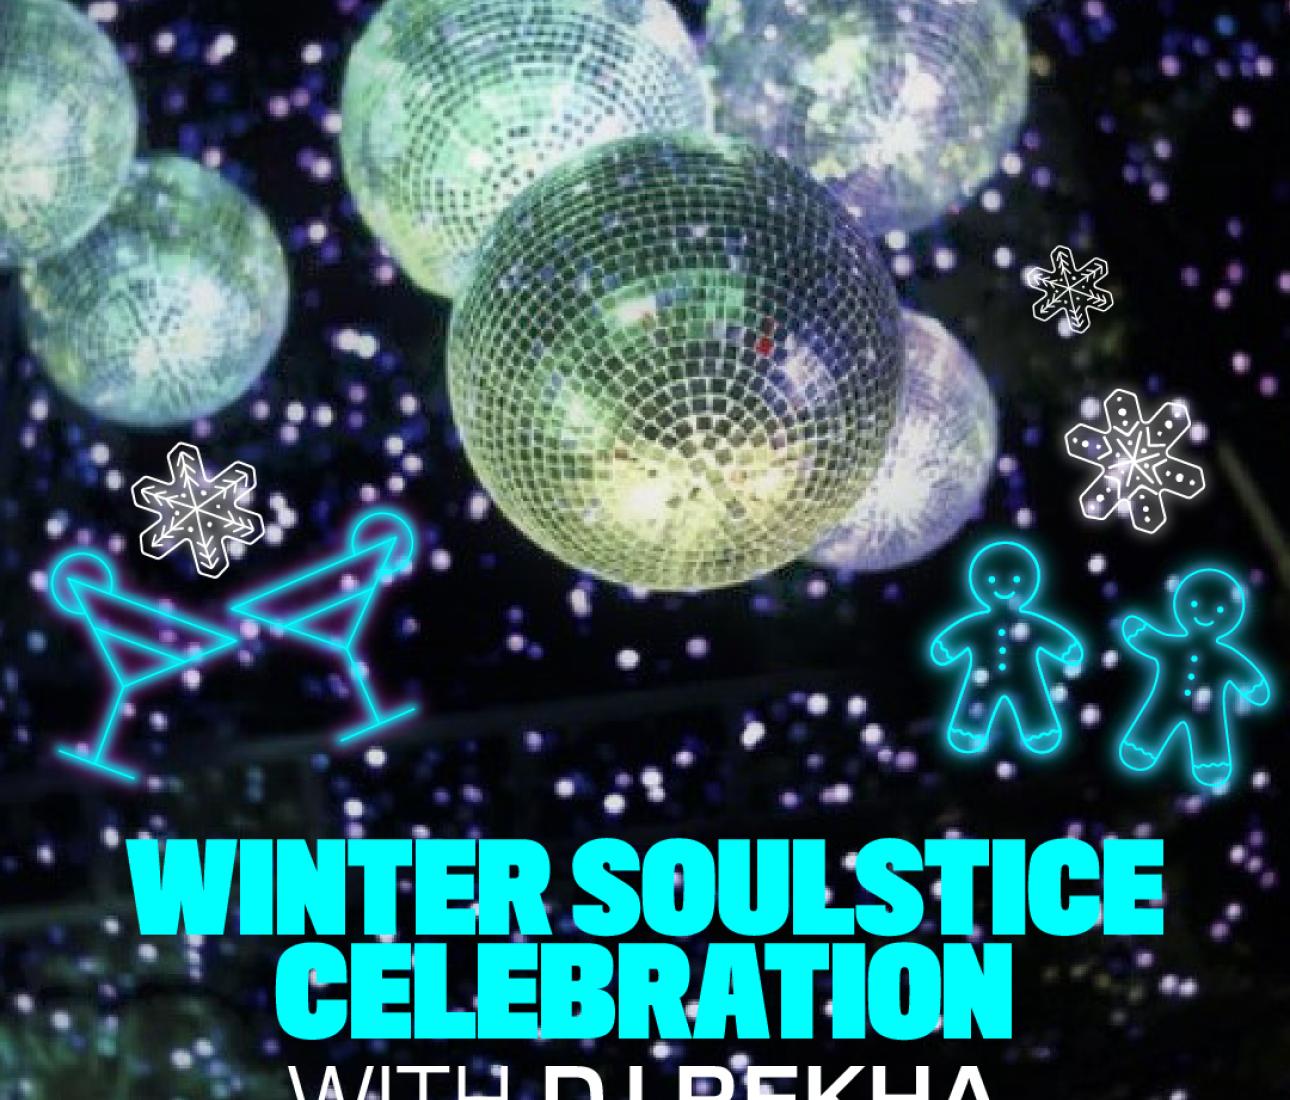 Cócteles y cultura: Winter Soulstice Celebration